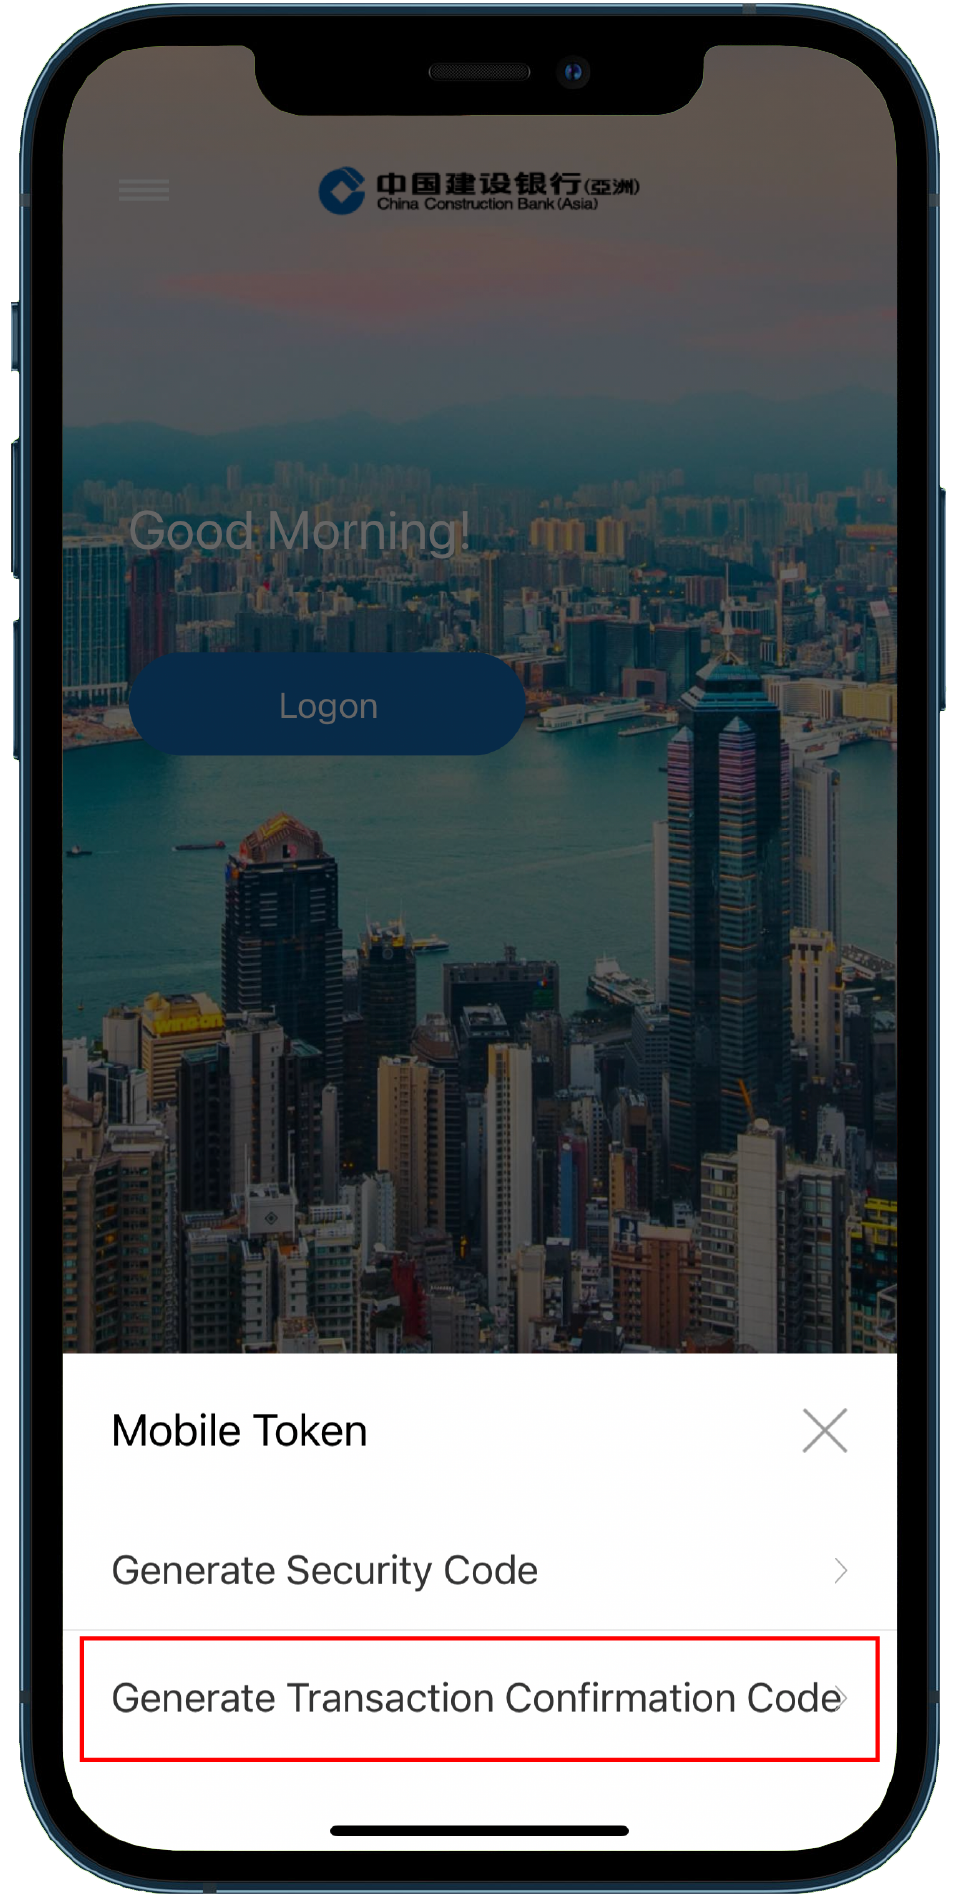 Mobile Token works on Online Banking